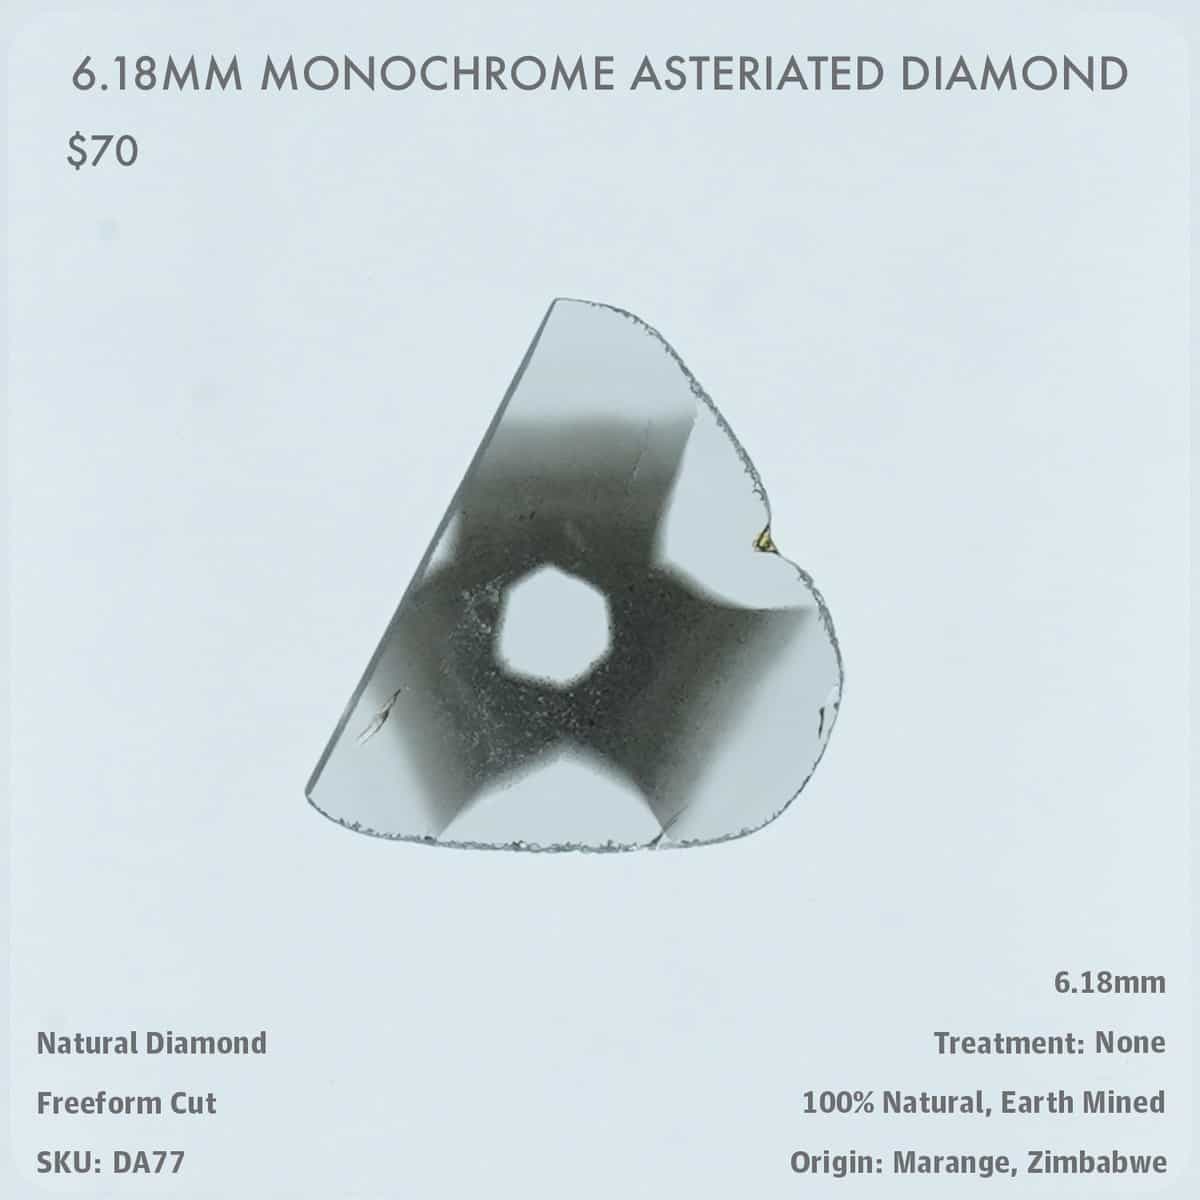 6.18mm Monochrome Asteriated Diamond